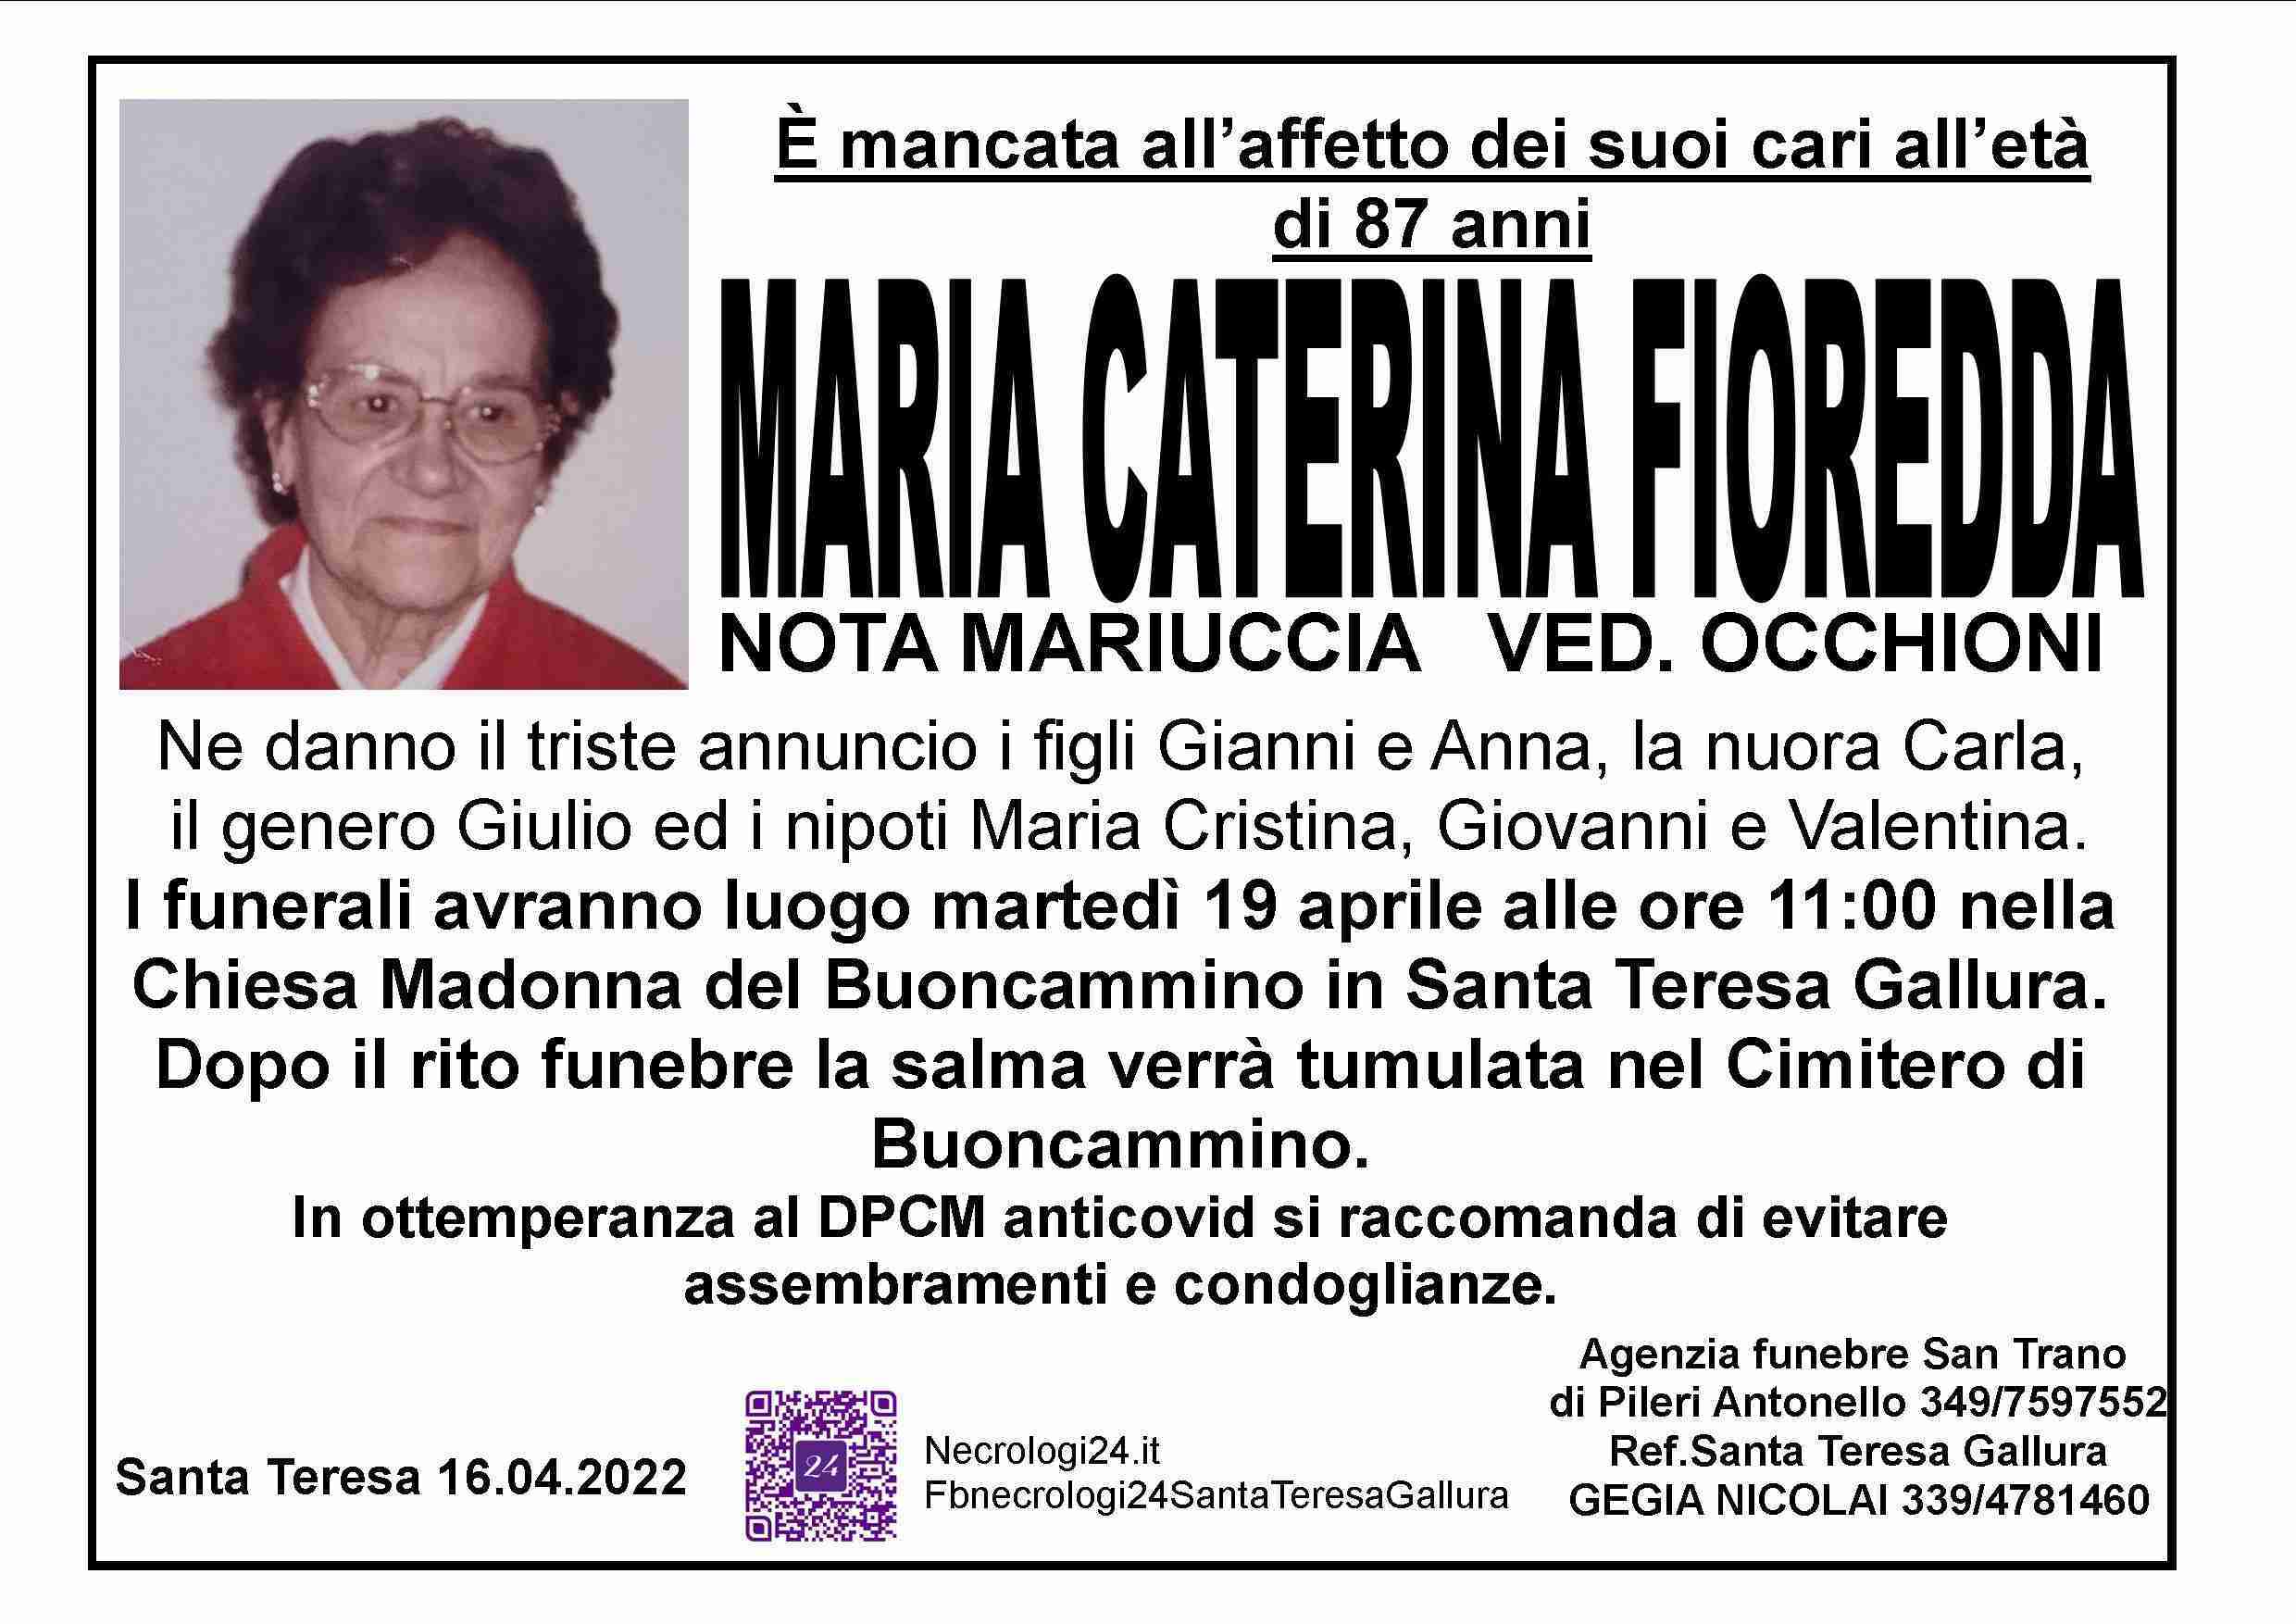 Maria Caterina Fioredda